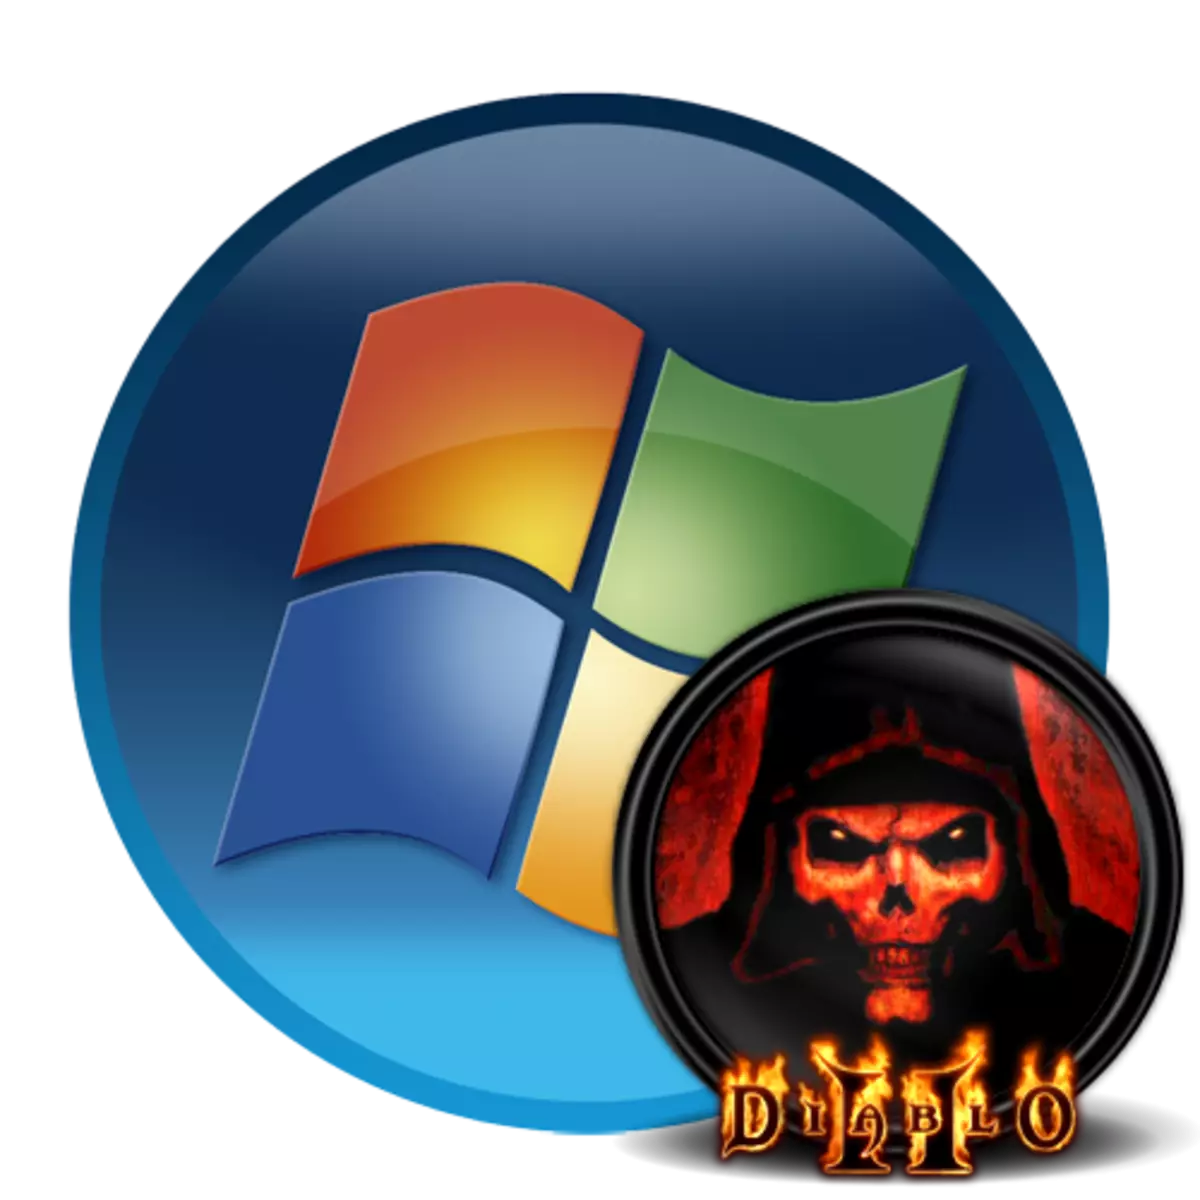 Diablo 2 fänkt net op Windows 7 un